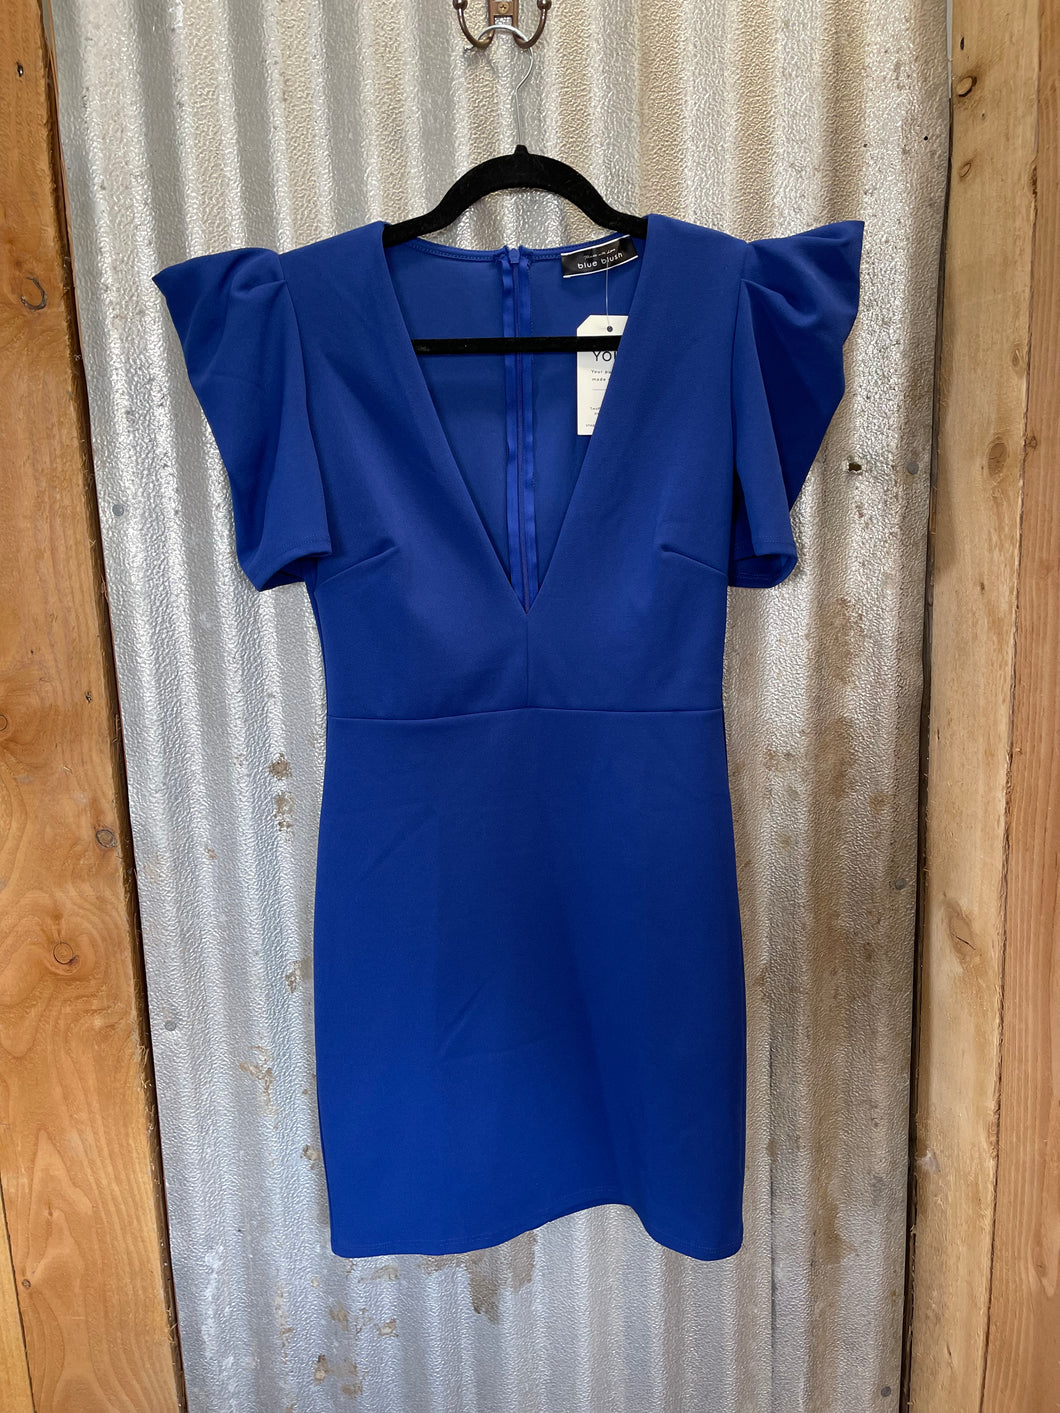 MEDIUM: NWT Royal Blue Dress